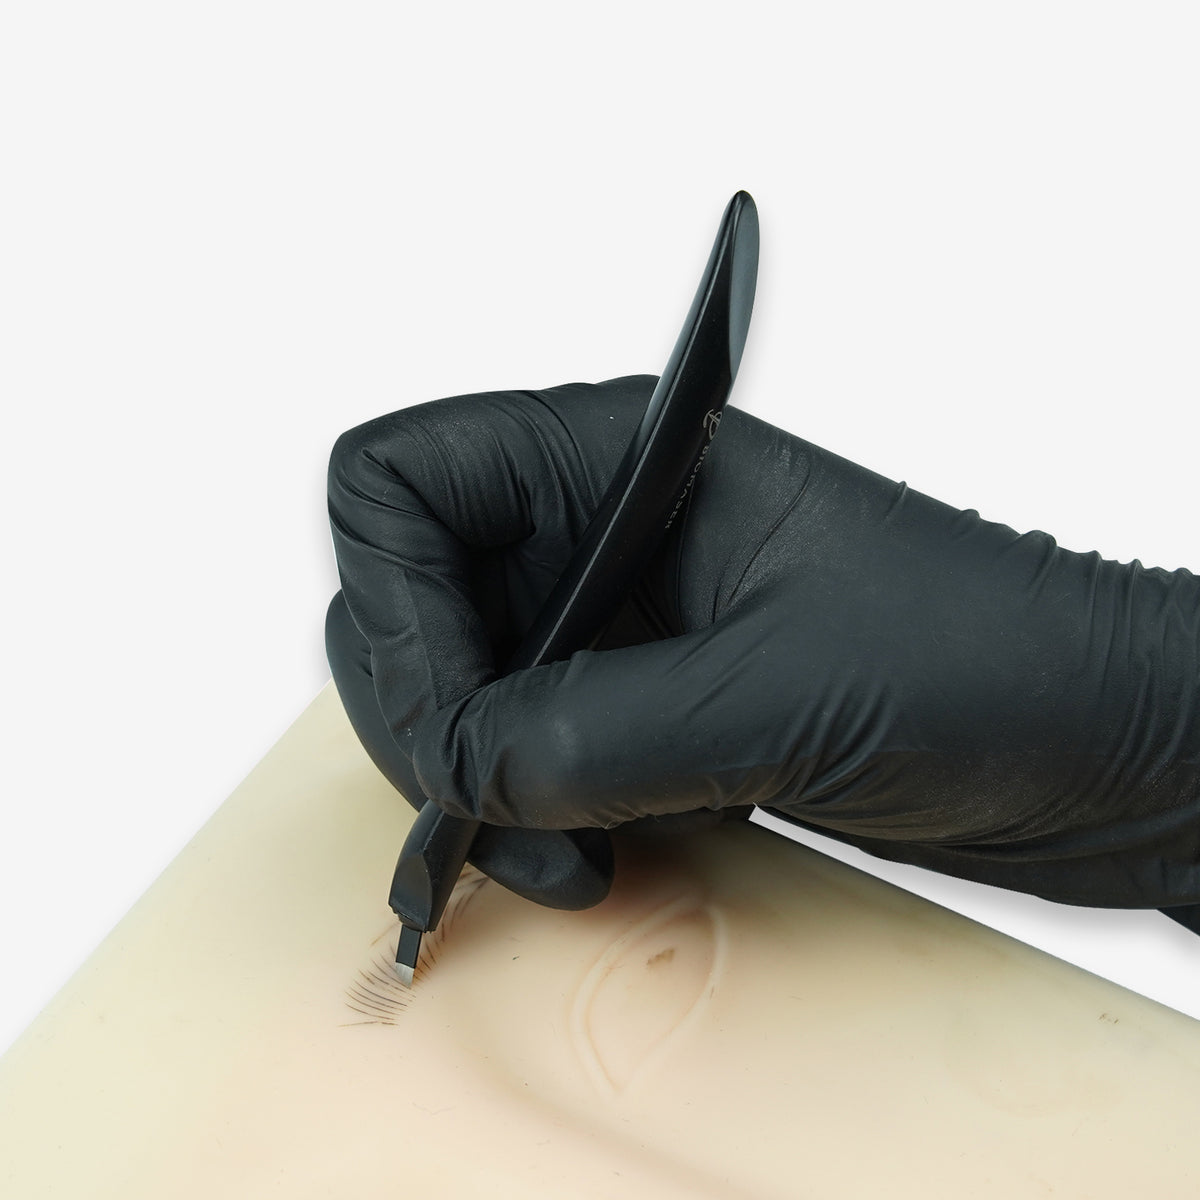 Biomaser Disposable Microblading Pen for Eyebrow Permanent Makeup Tattoo 10PCS